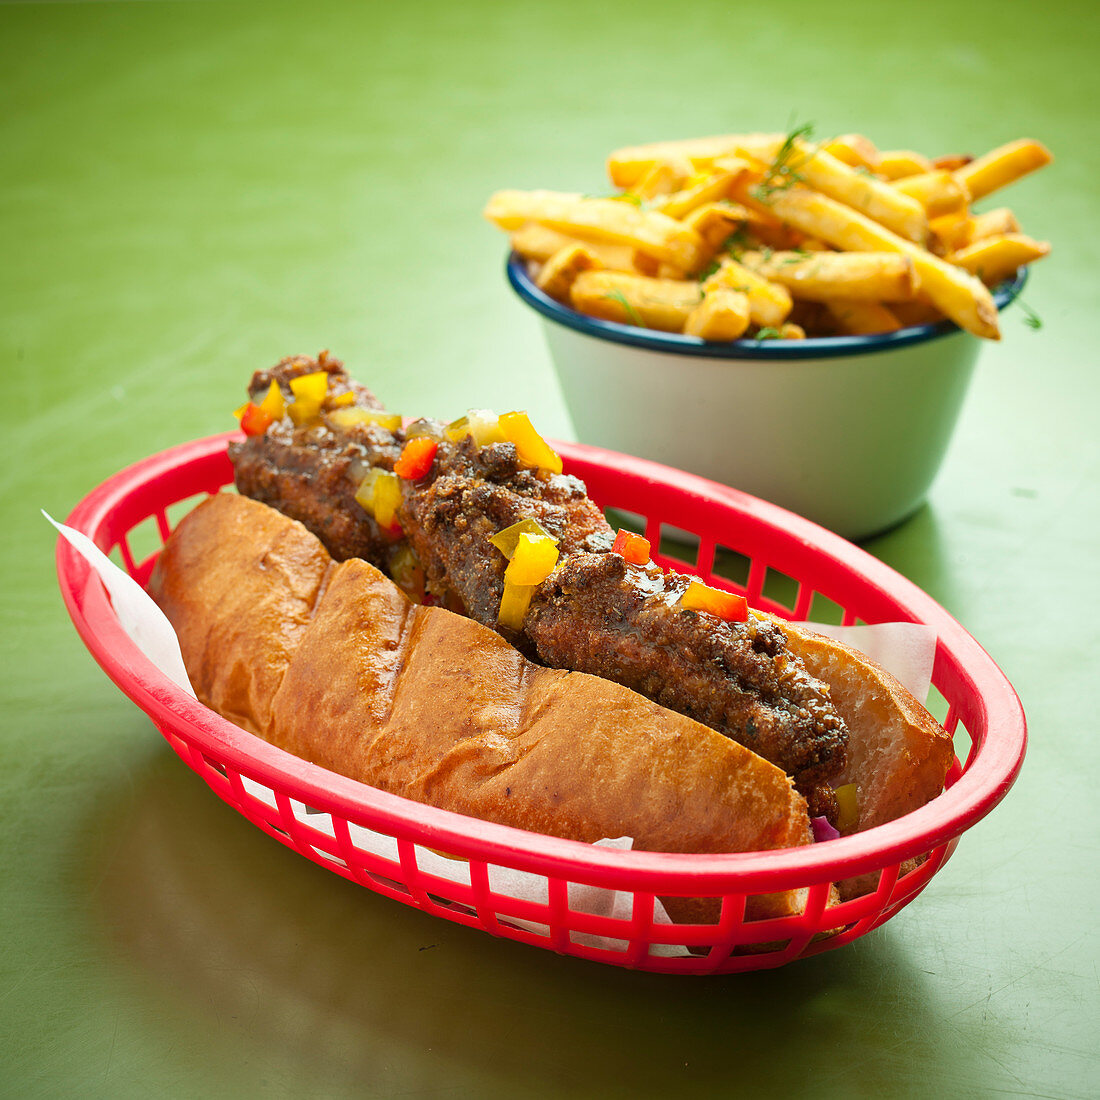 Vegetarian sausage hot dog with fries